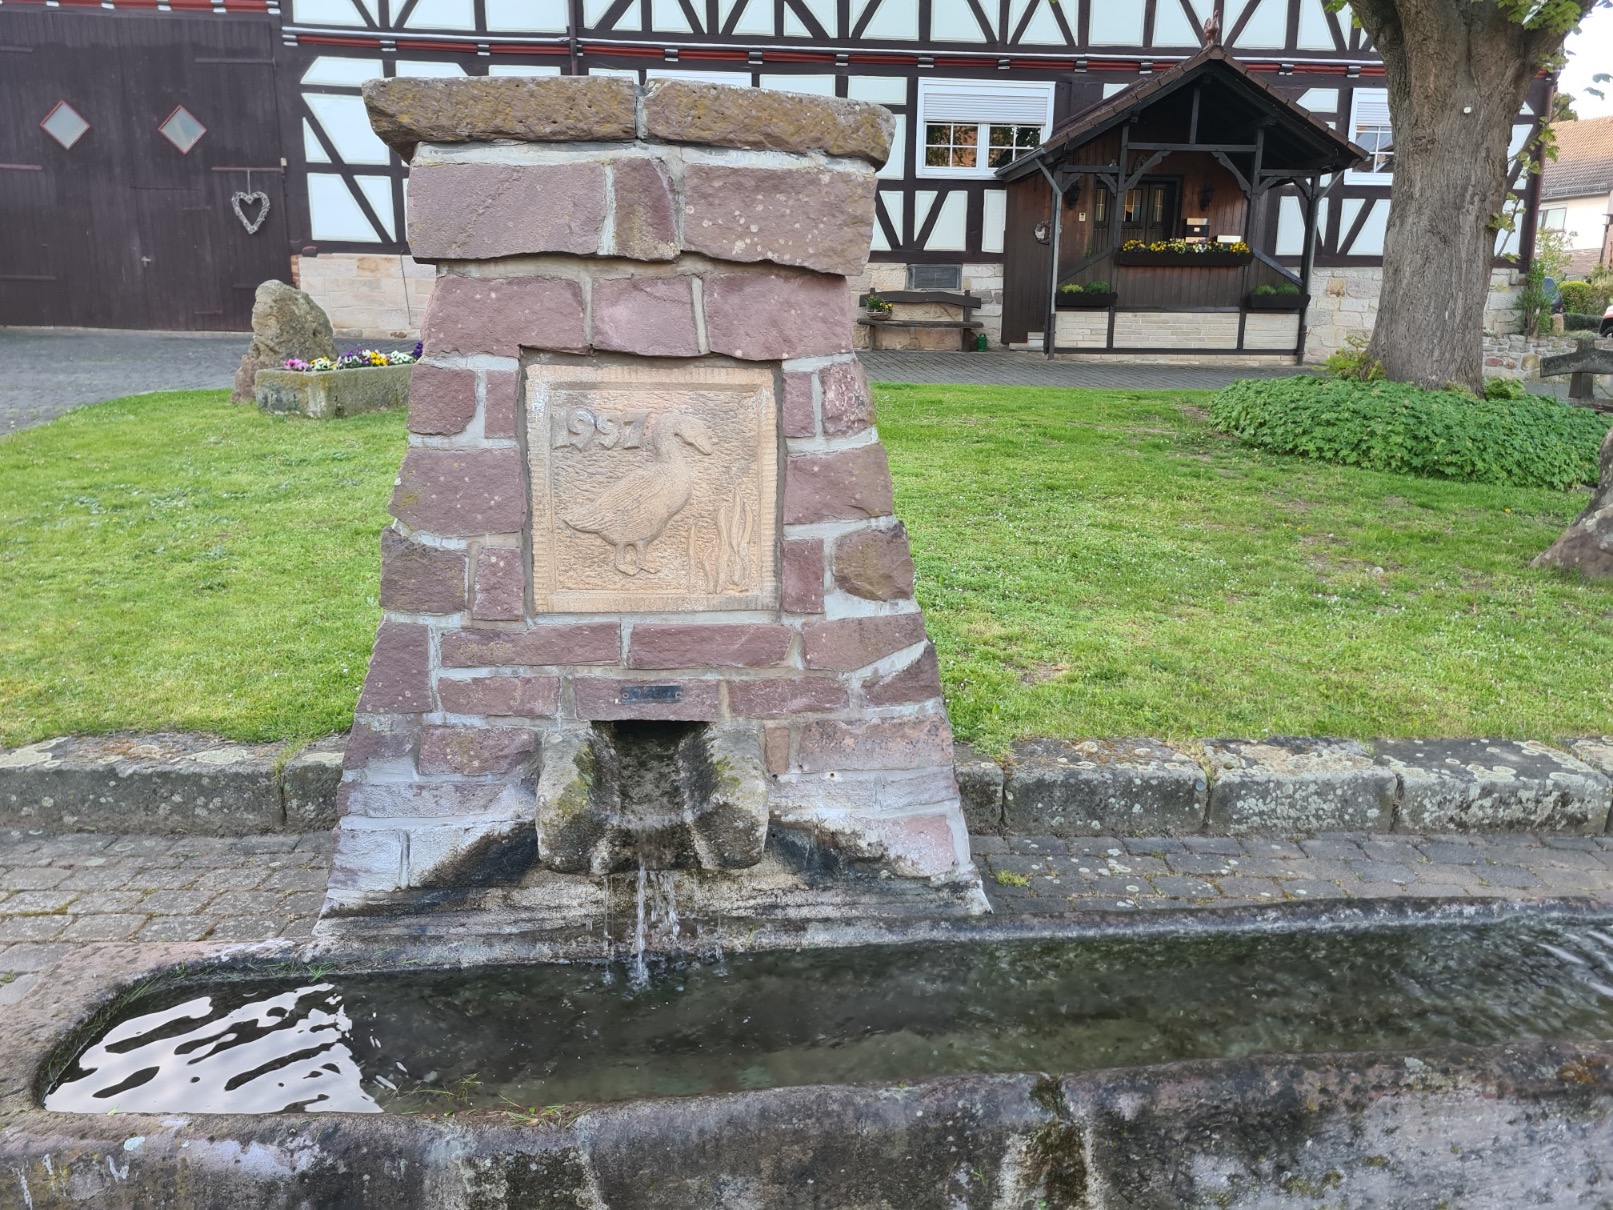 Der historische Brunnen am Kumpplatz in Simmershausen